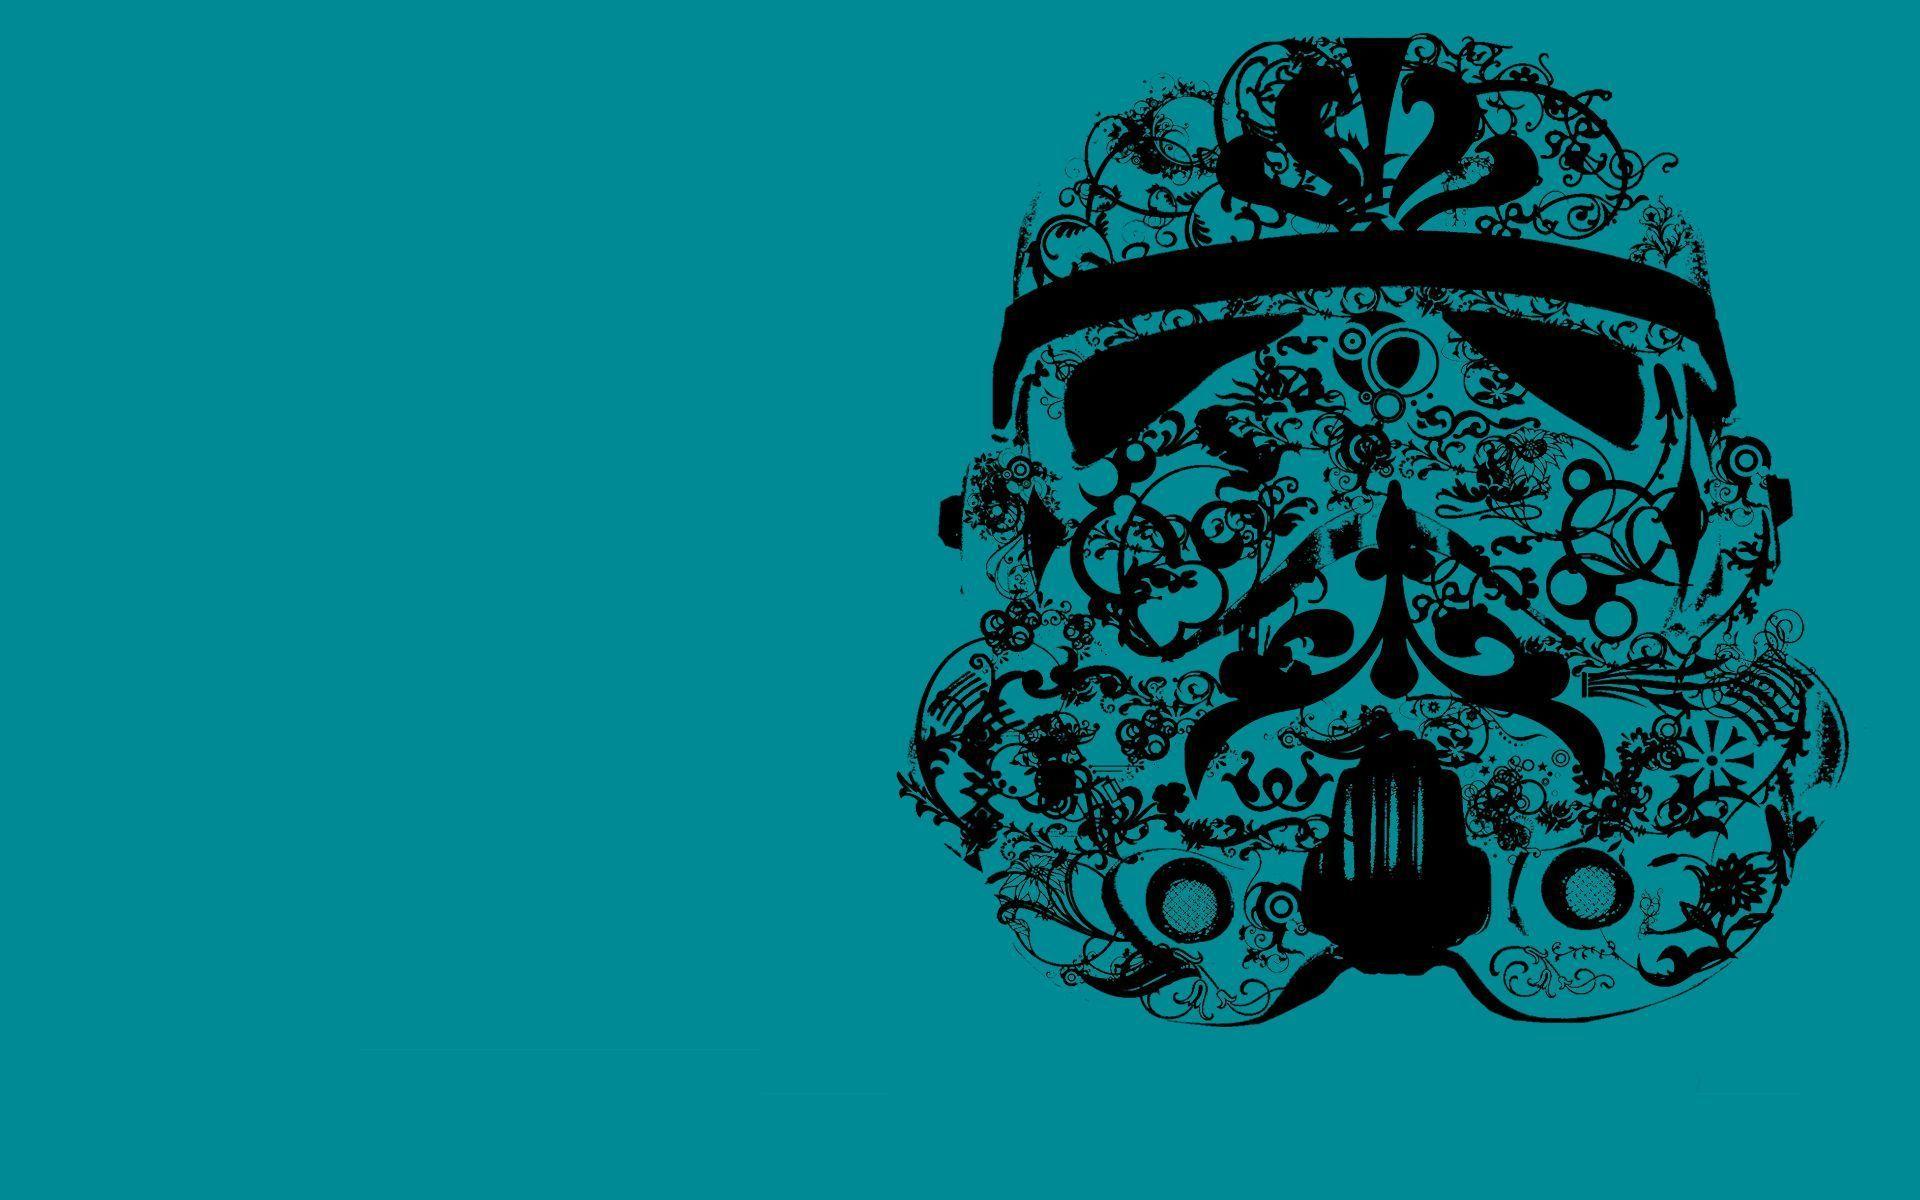 Stormtrooper Art wallpaper